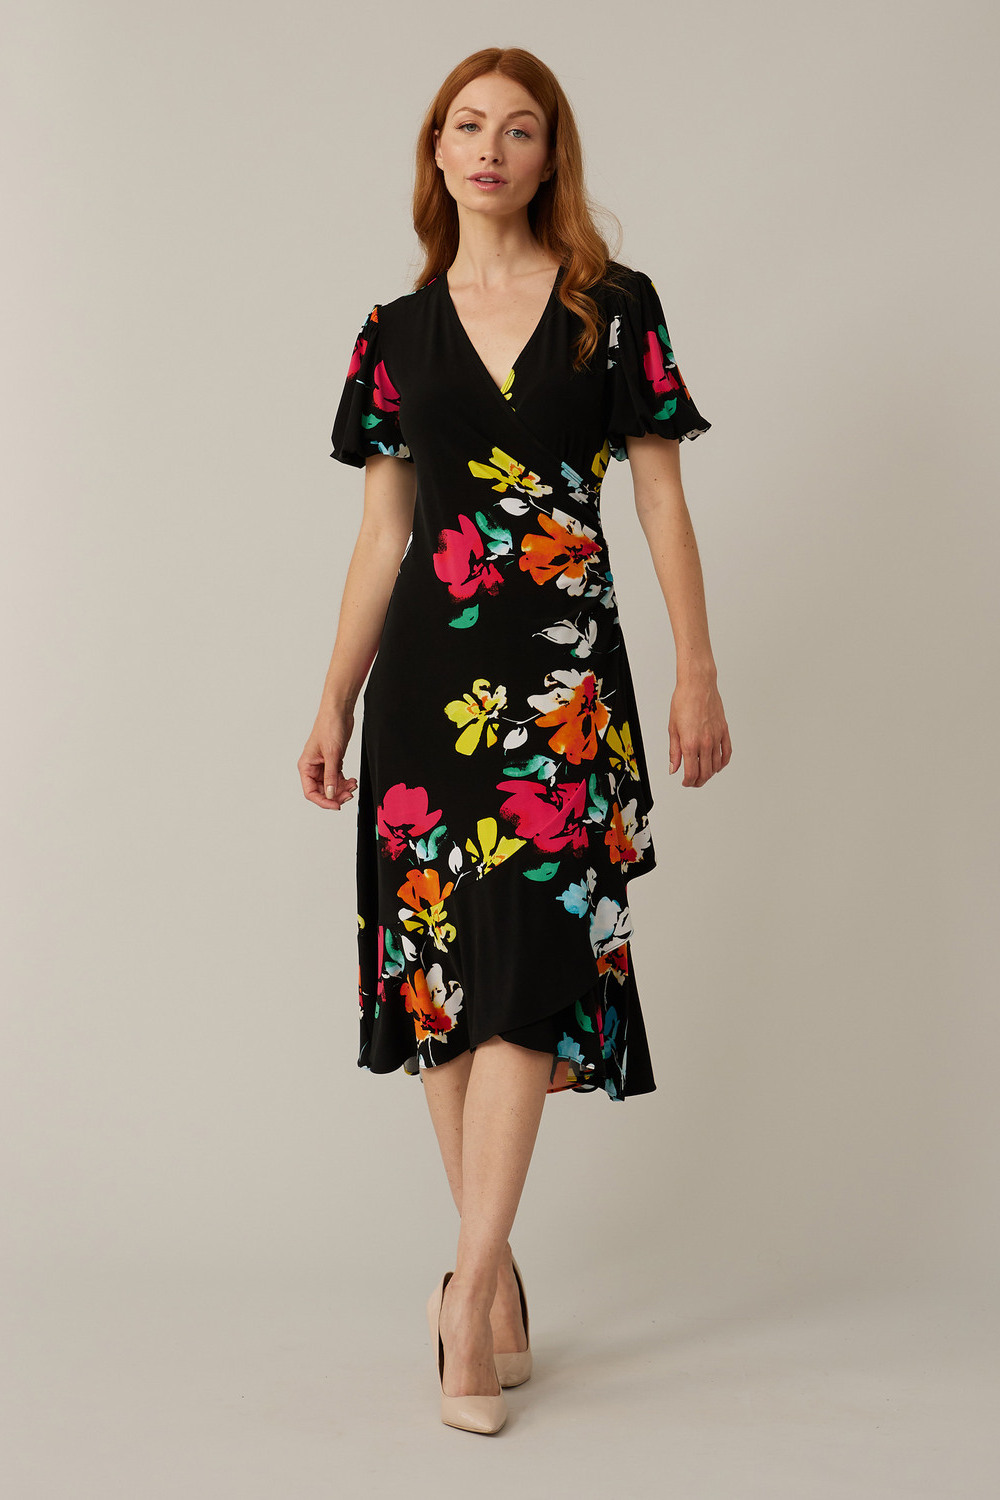 Joseph Ribkoff Floral Wrap Dress Style 221068. Black/multi